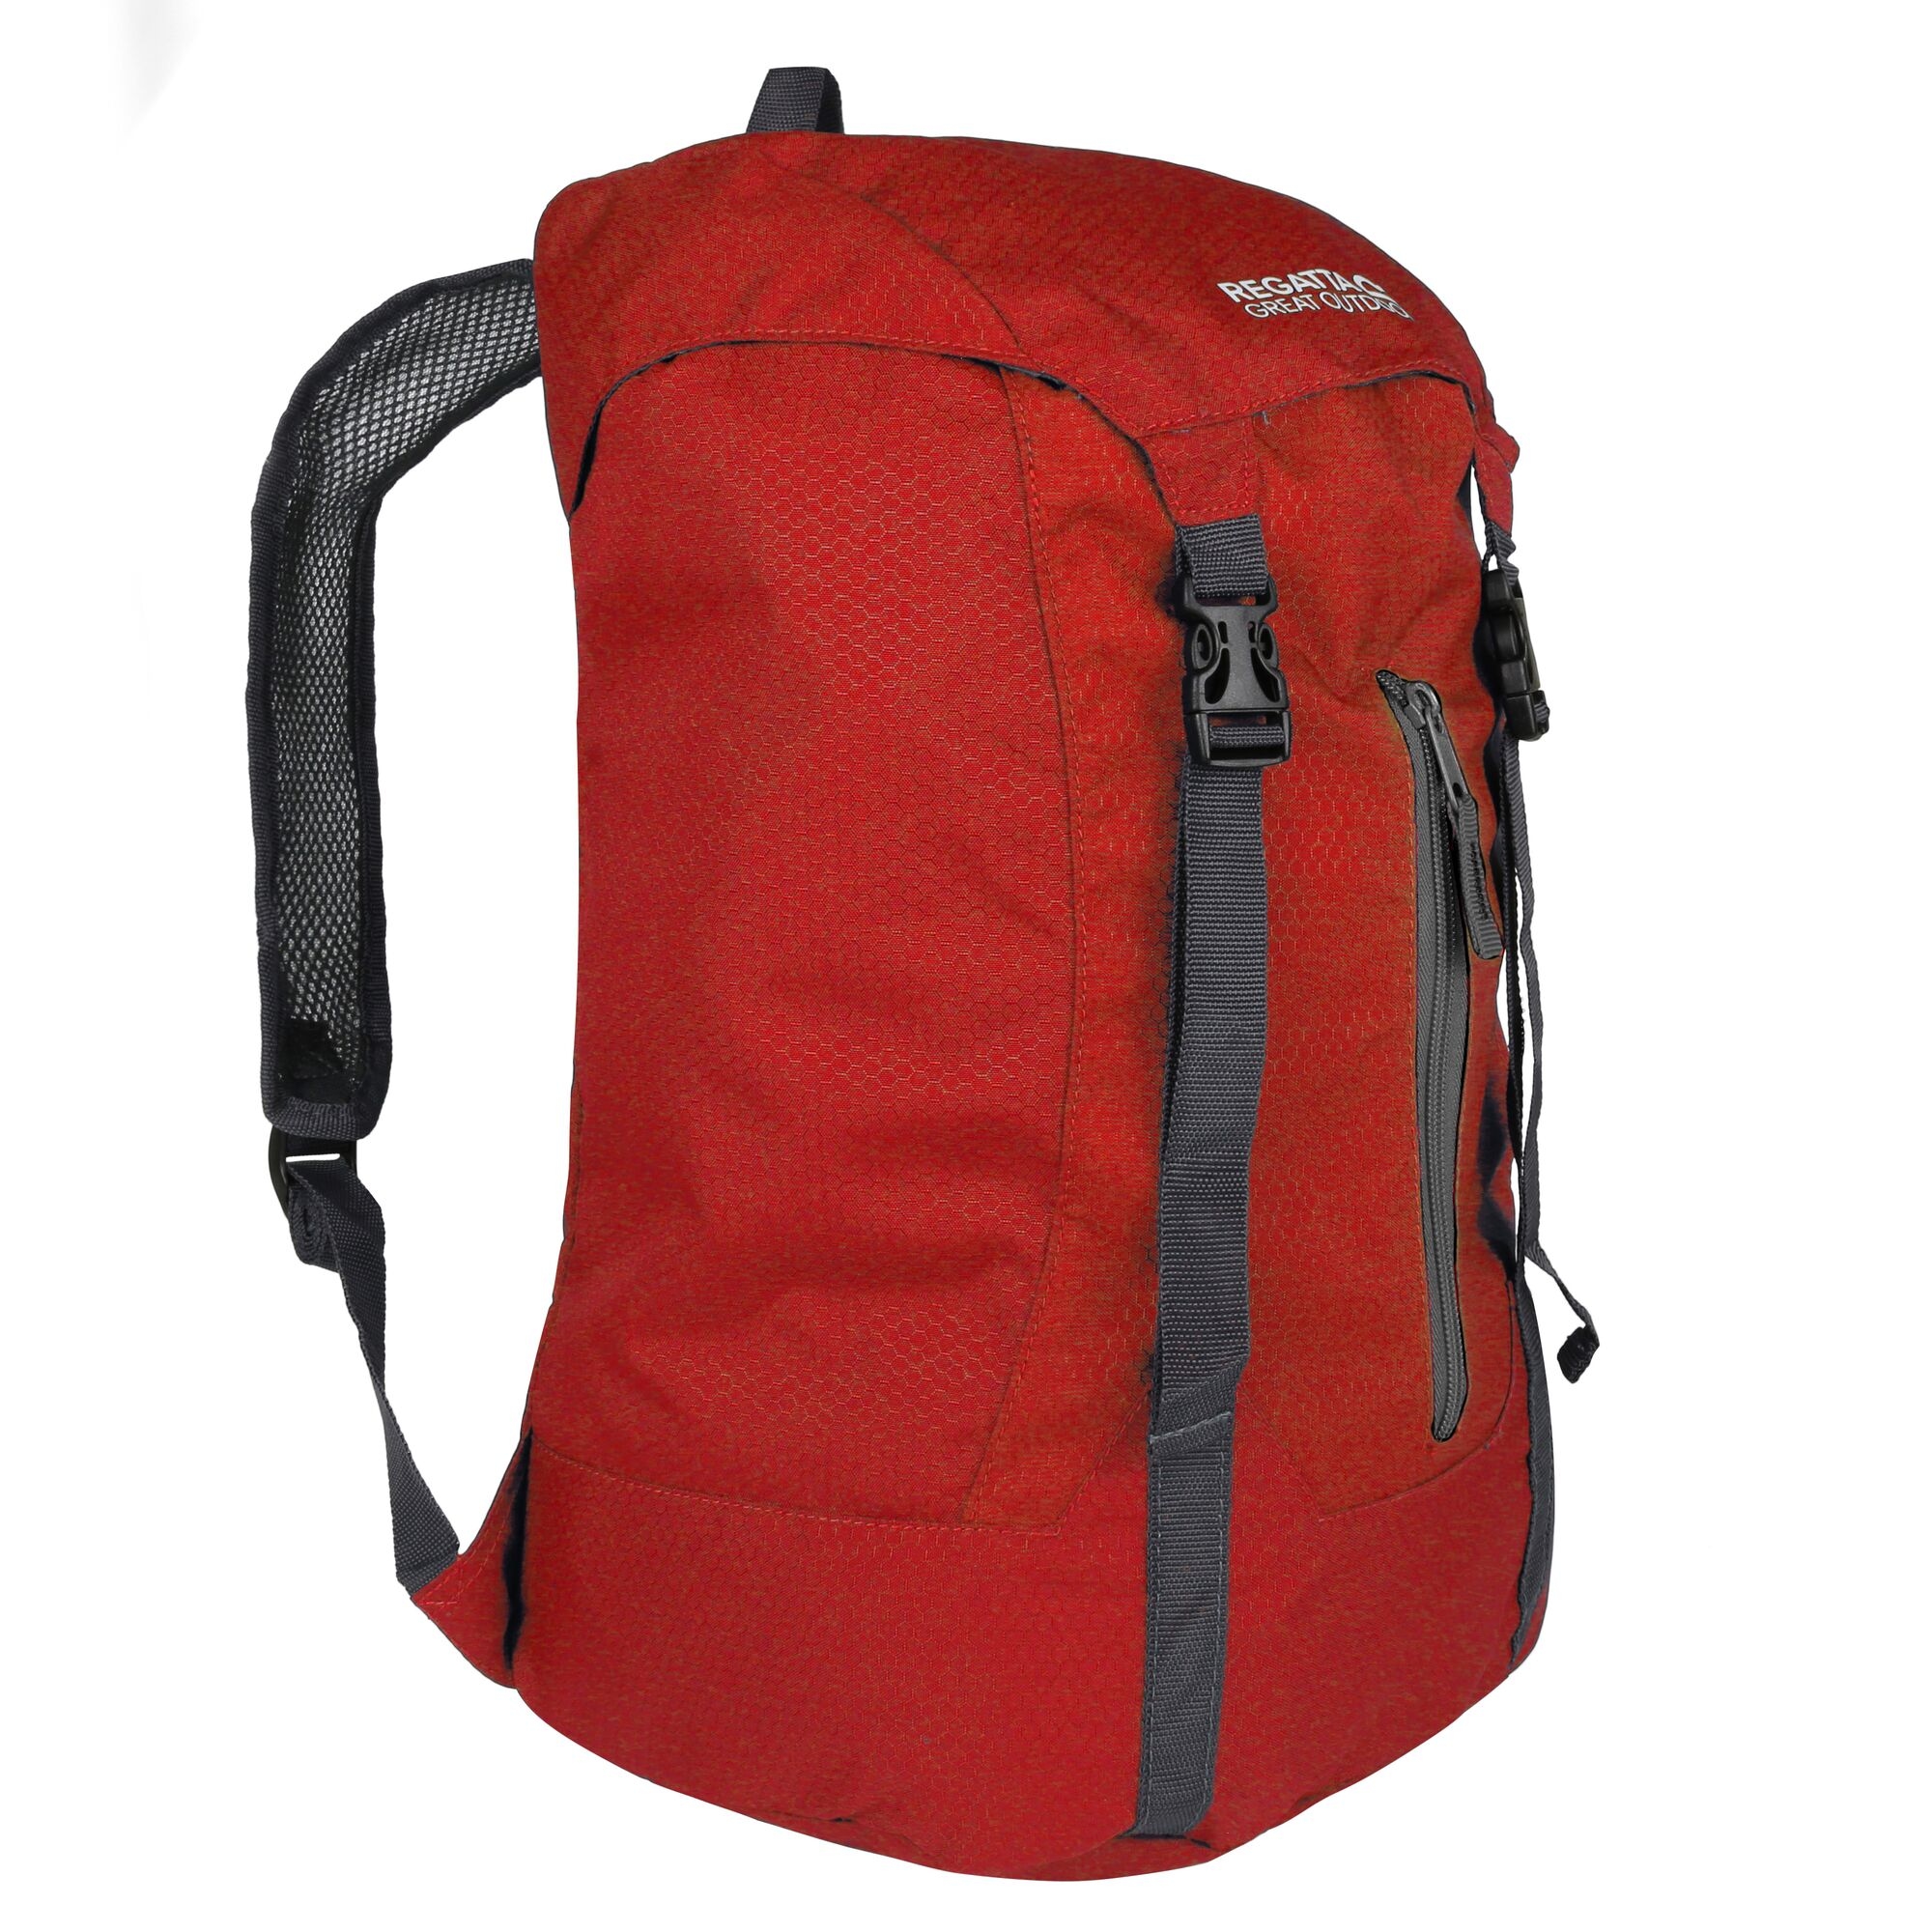 Regatta Easypack II 25L Packaway Backpack Pepper, Size: Sgl